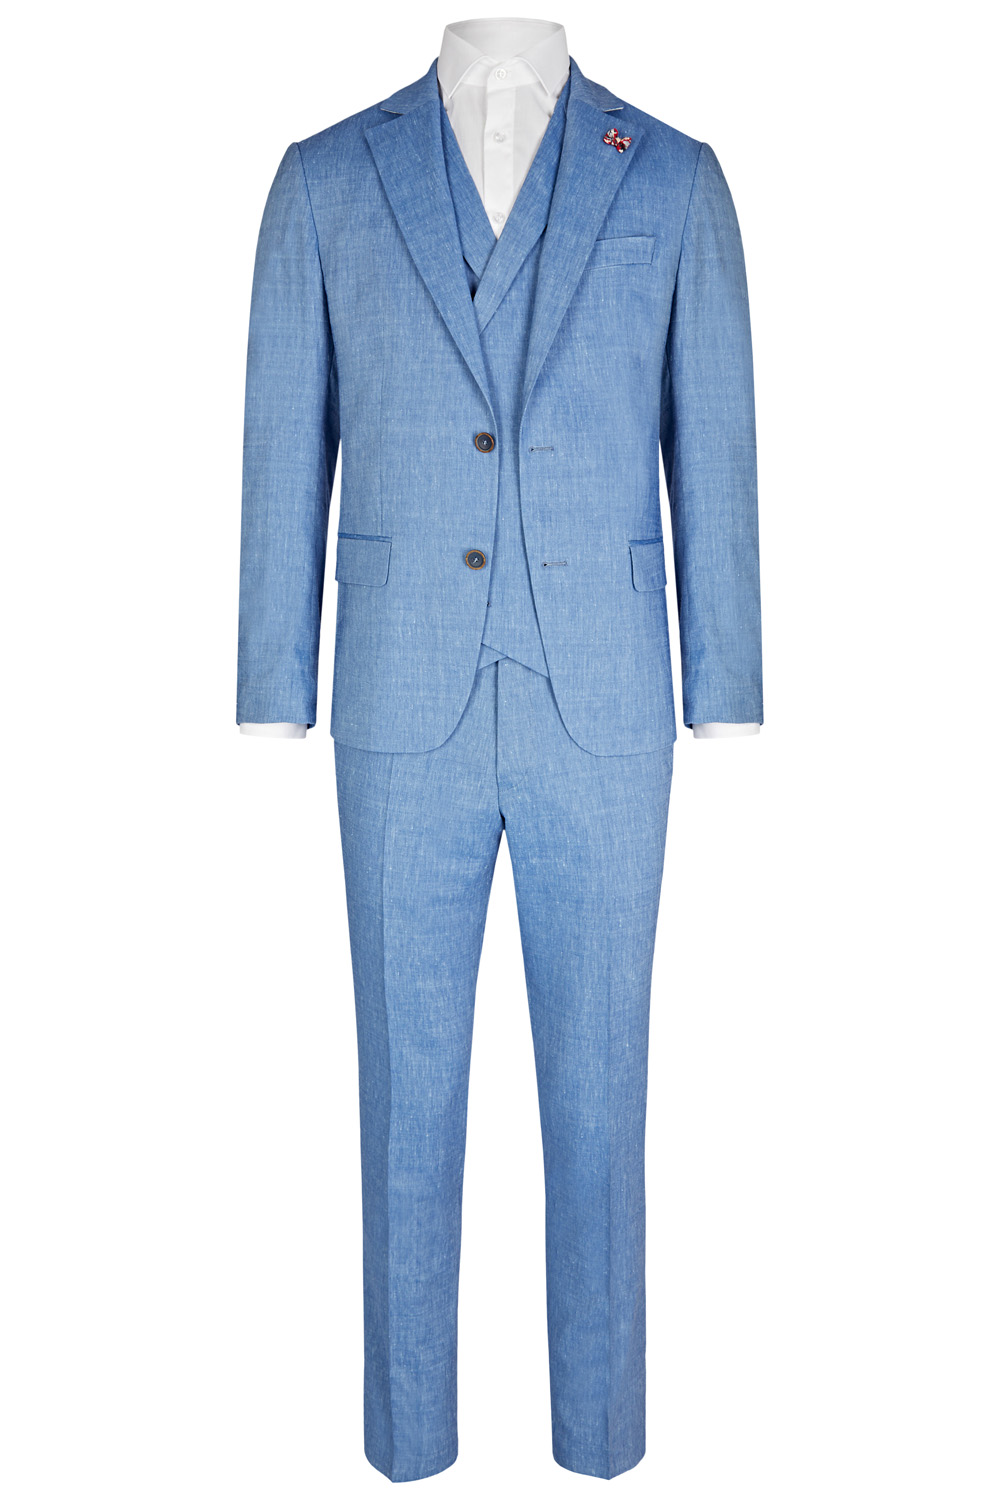 Ciel Blue Vintage 3 Piece Wedding Suit - Tom Murphy's Formal and Menswear